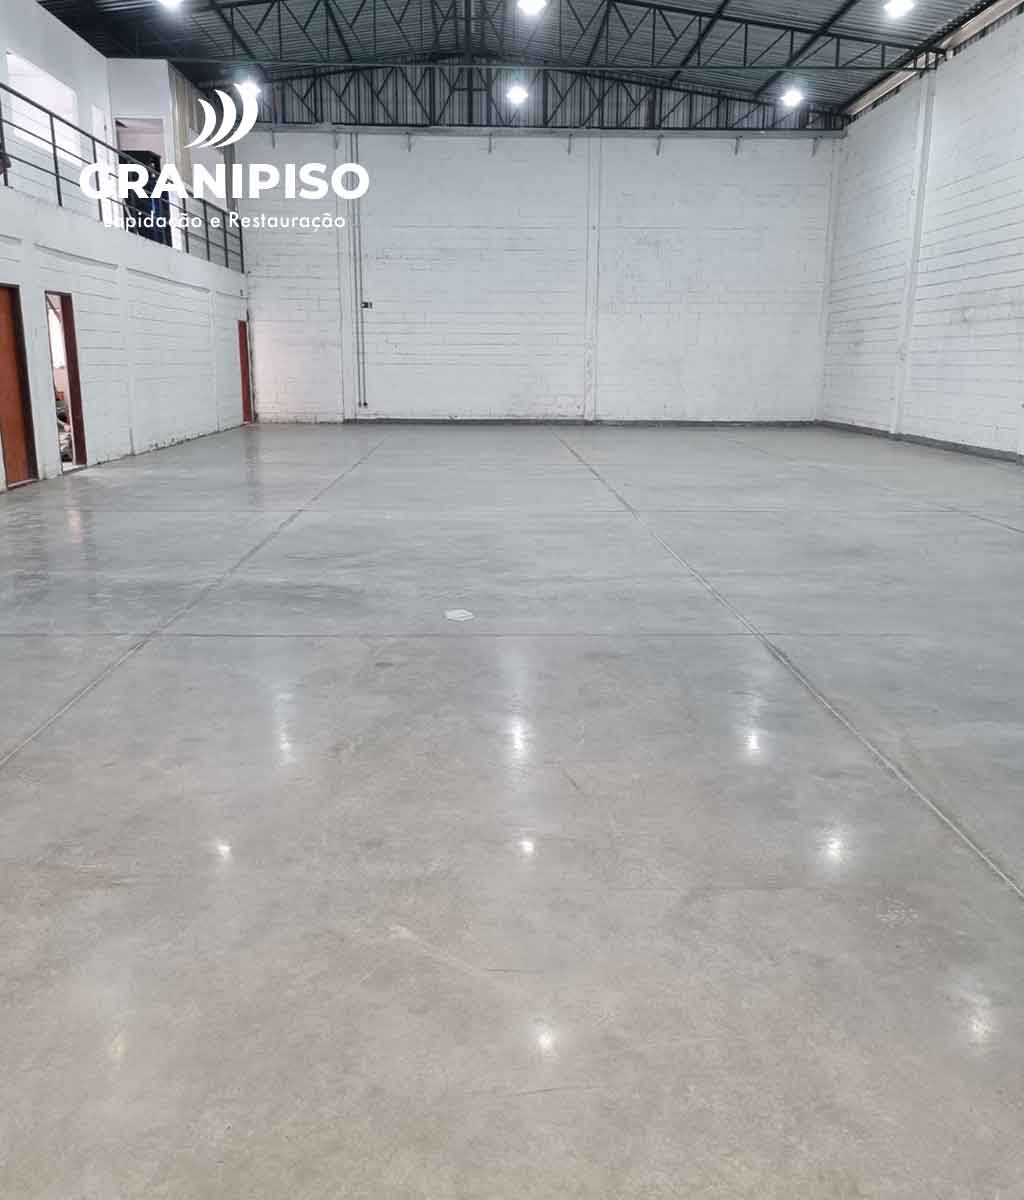 lapidacao-piso-industrial-galpao-granipiso-02